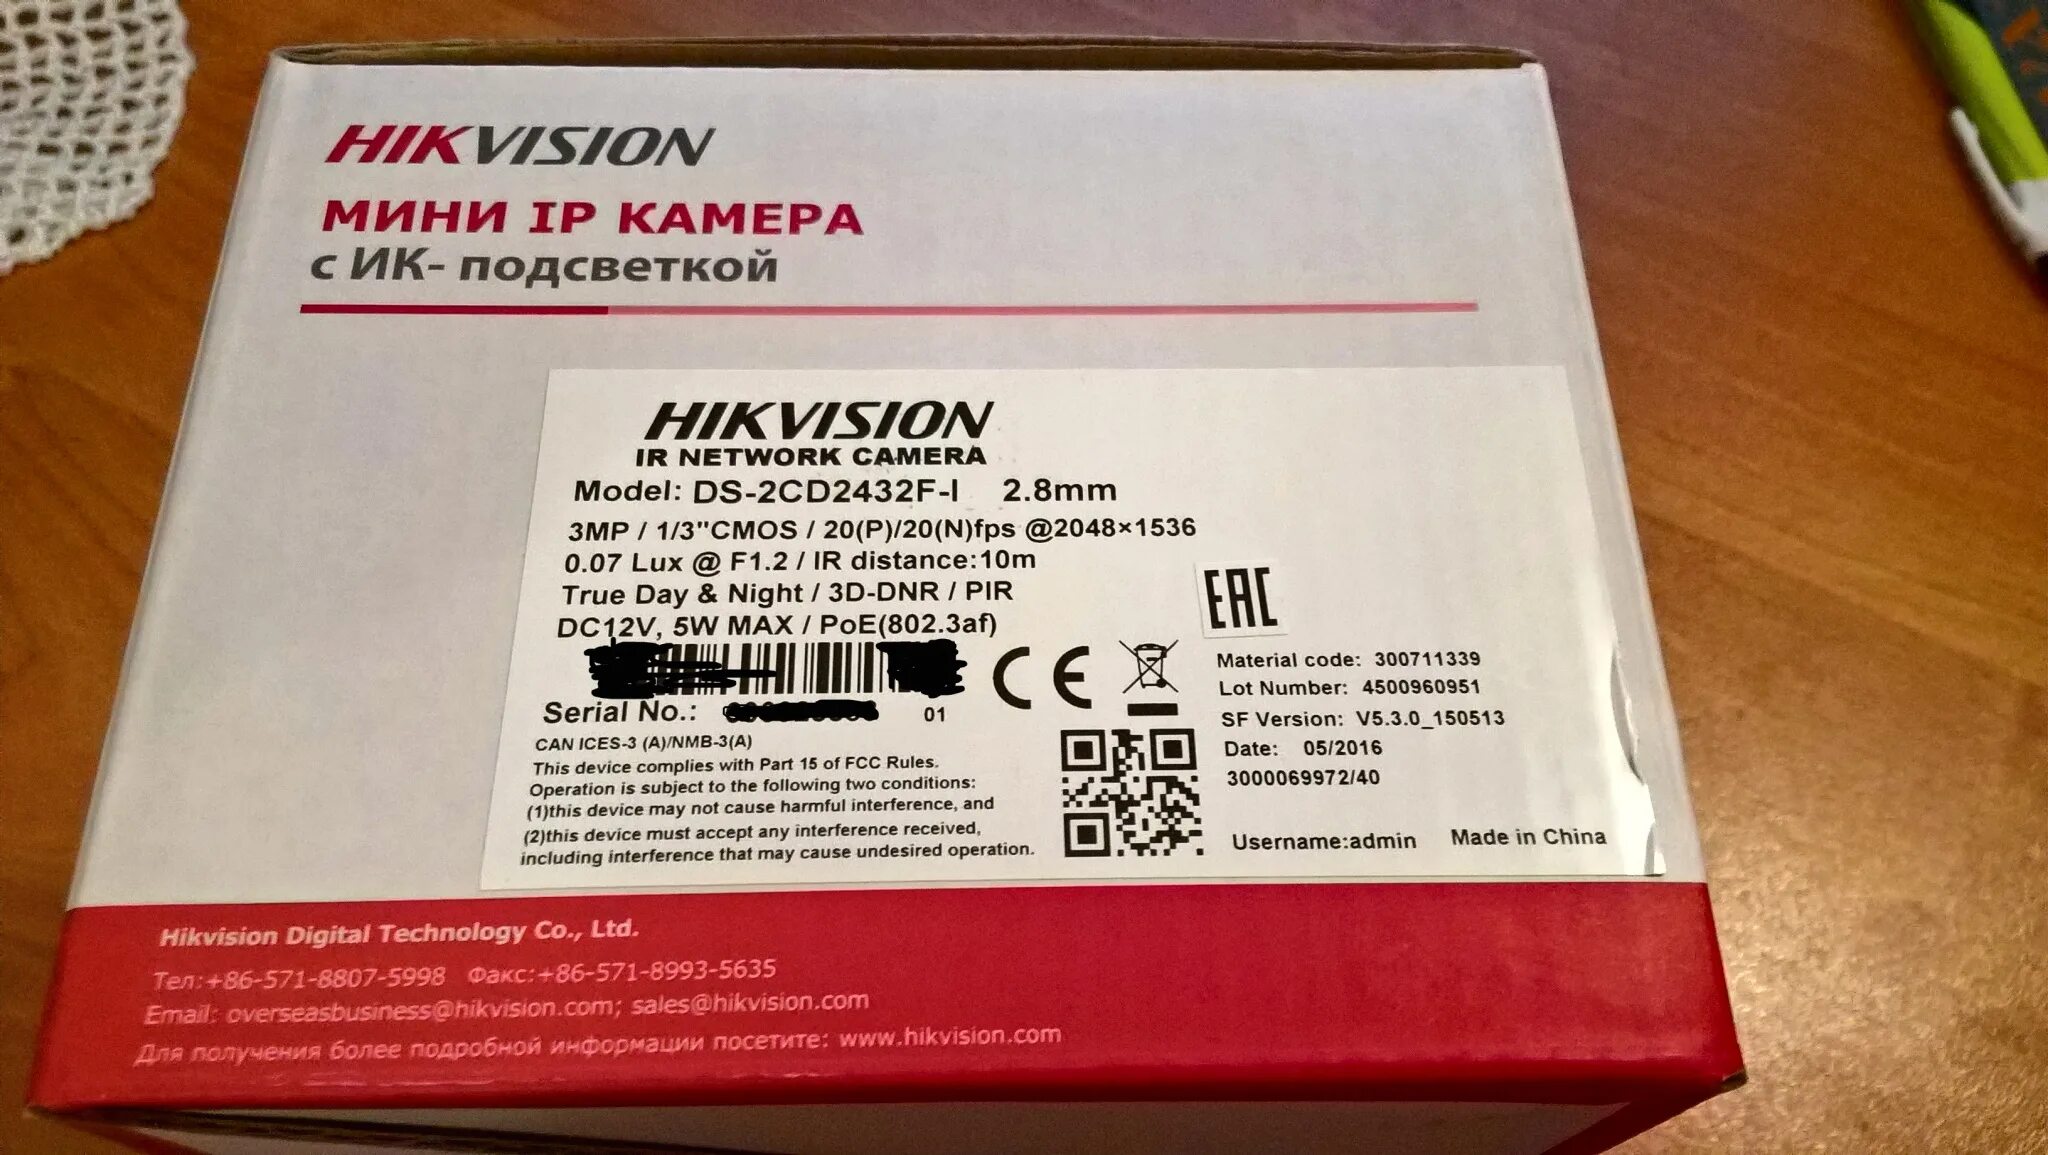 IP камера Hikvision DS-2cd2432f-i. Видеокамера Hikvision DS-2cd2432f-is. Серийный номер камеры Hikvision. Видеокамера hkvlslon DS-2cd2432f-l 2.8 мм (verification code: мемвмм 02/2016.